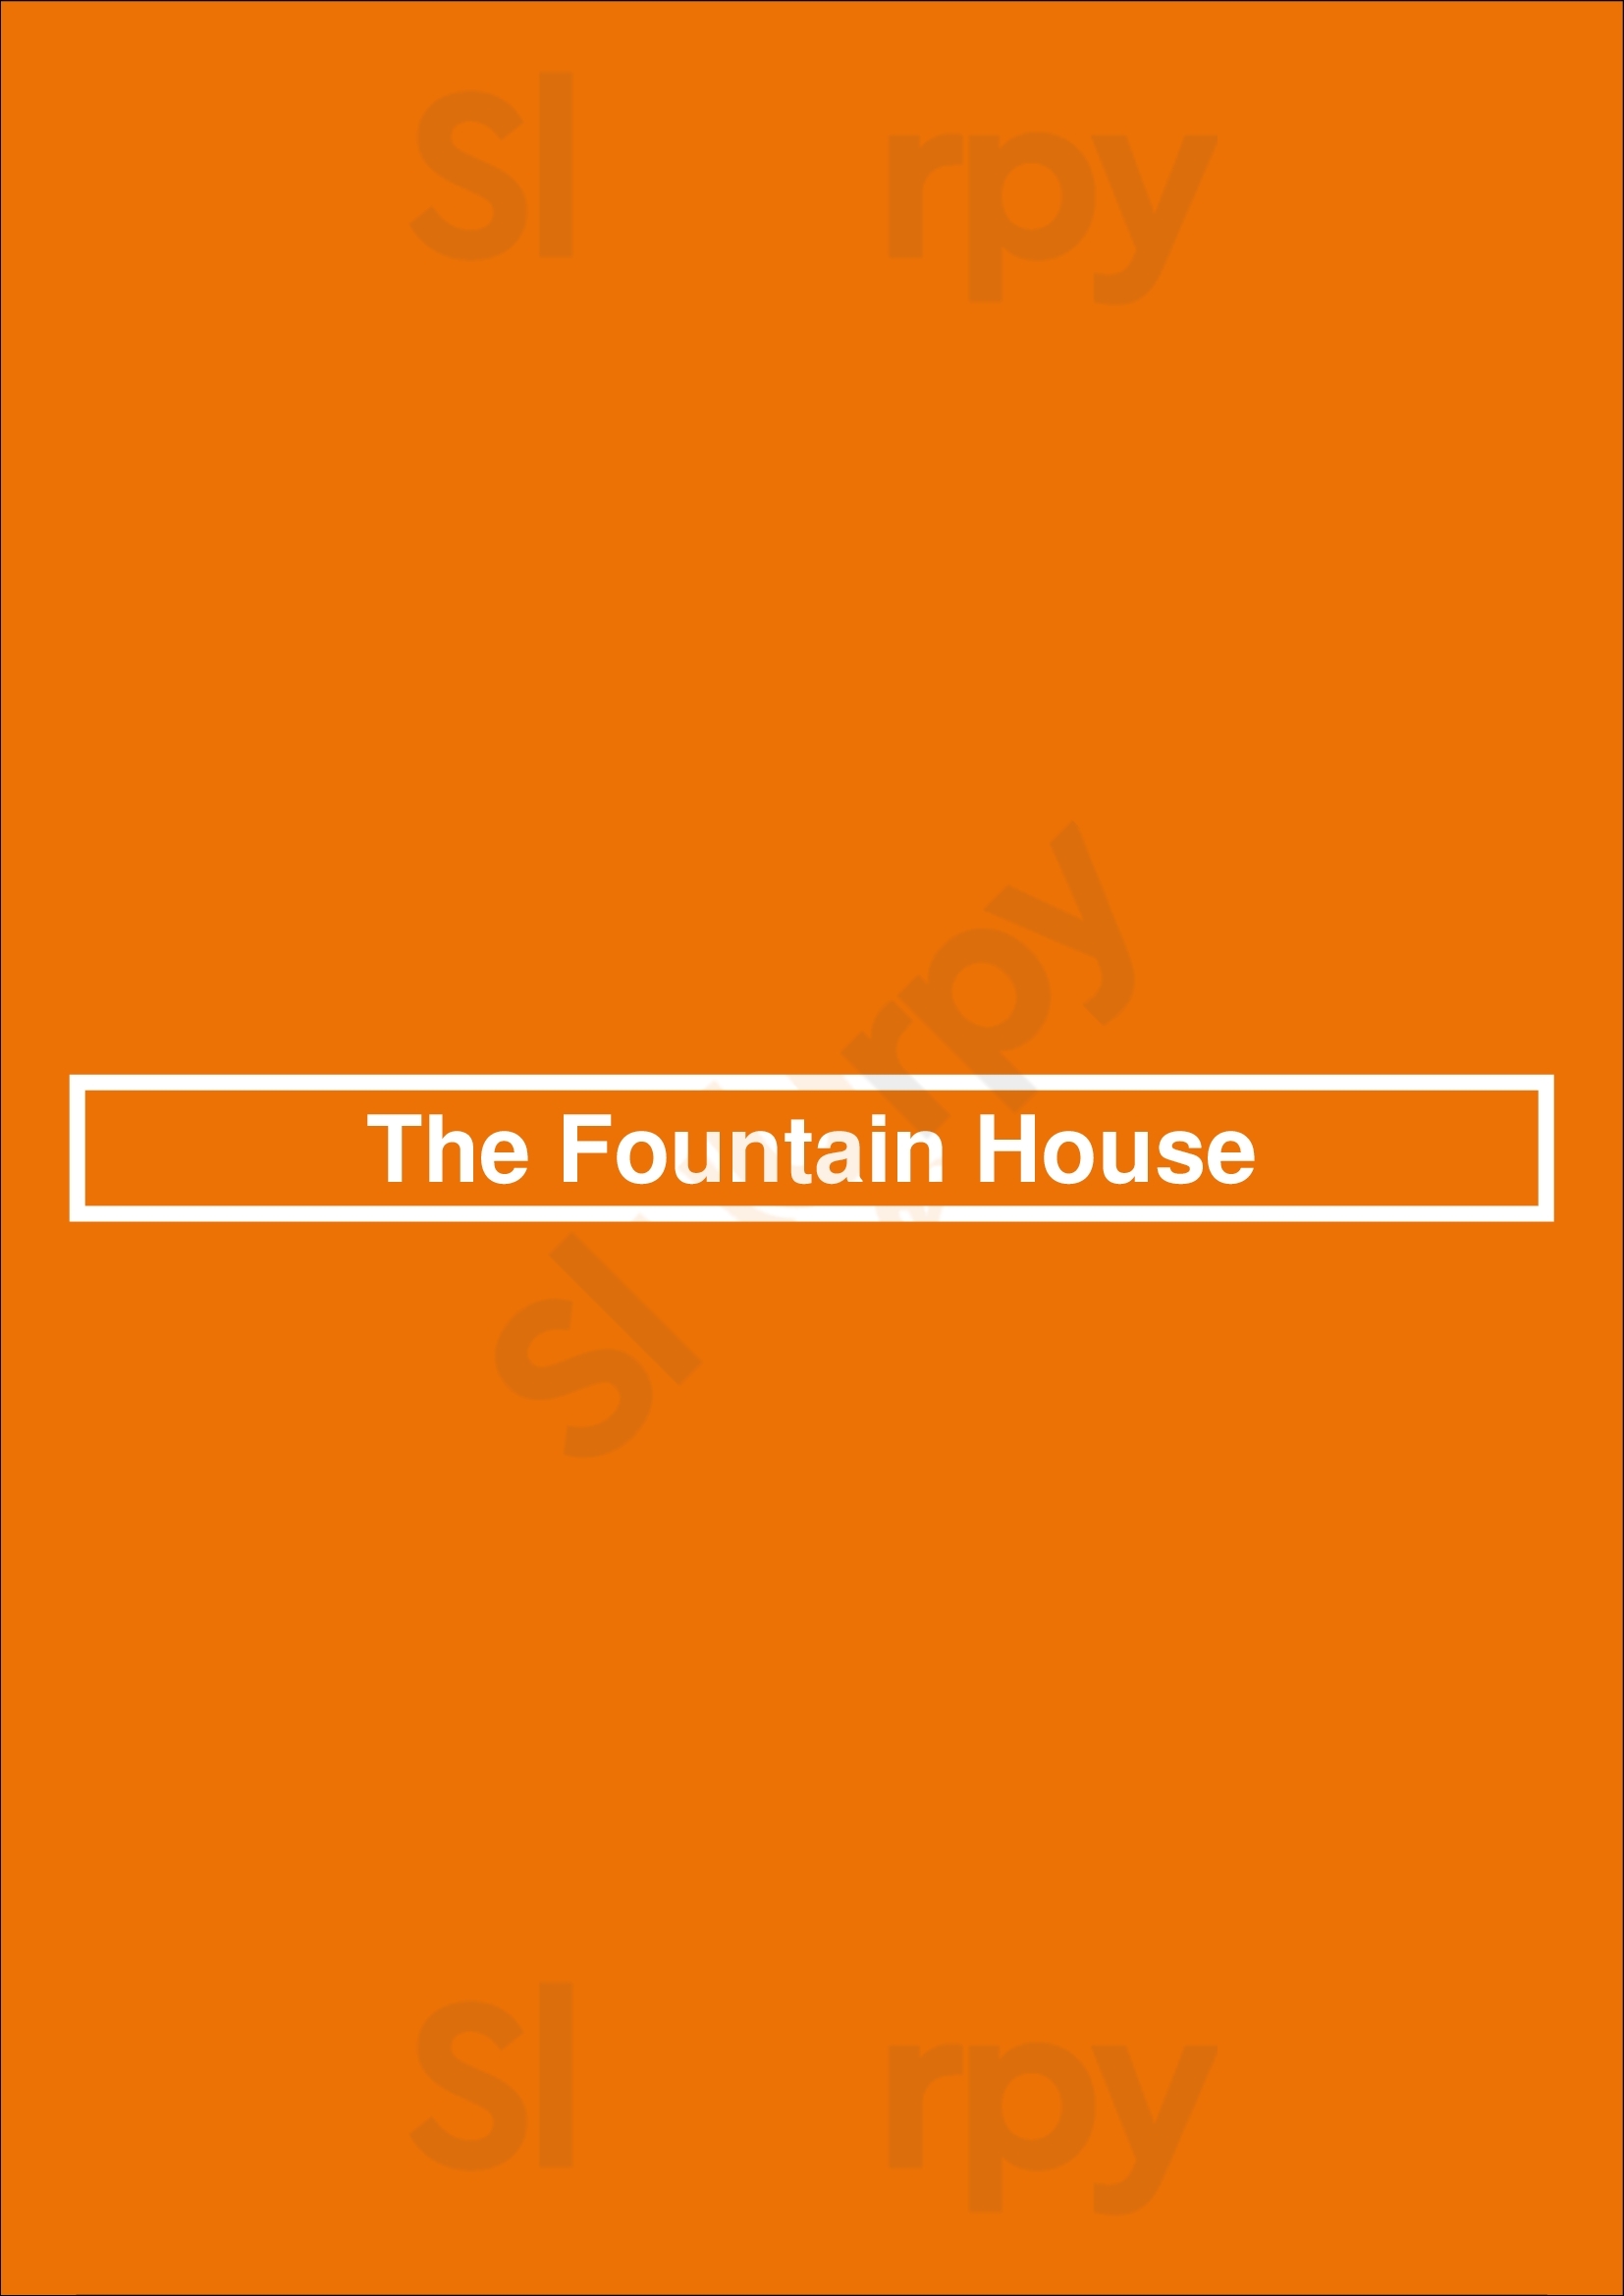 The New Fountain House Braintree Menu - 1